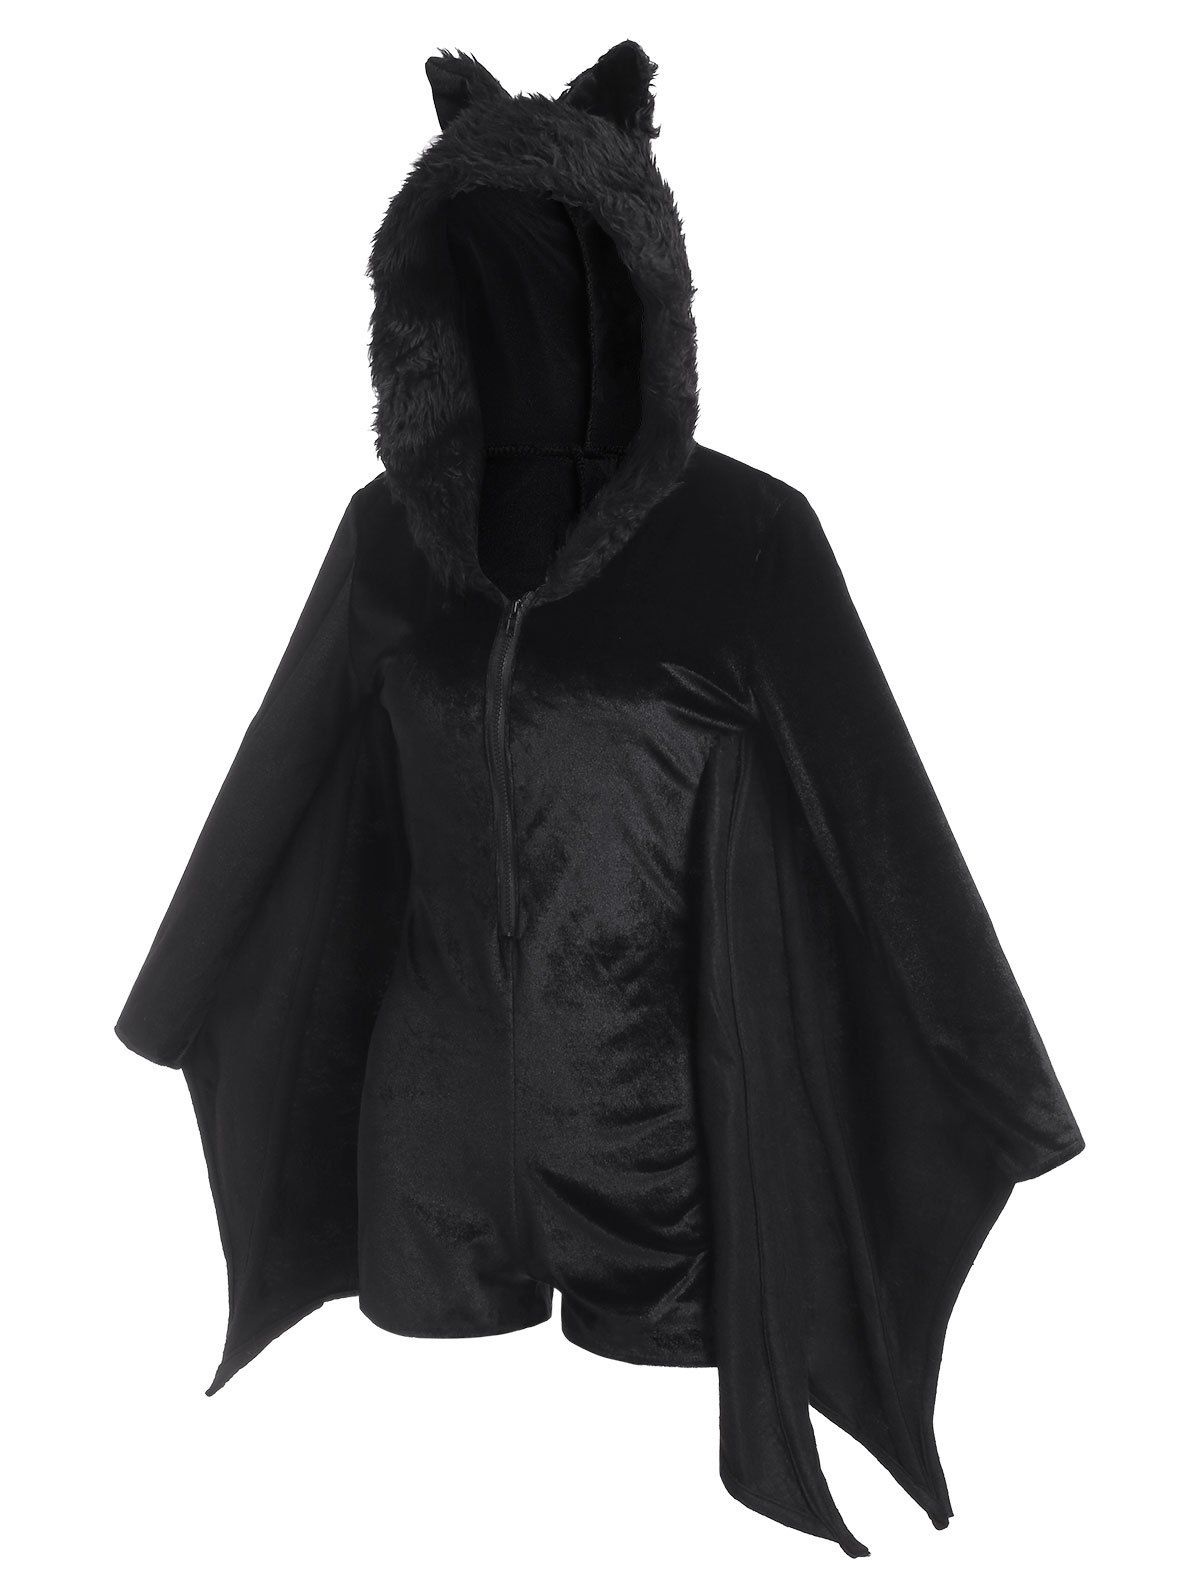 Faux Fur Panel Velvet Bat Halloween Costumes - BLACK M